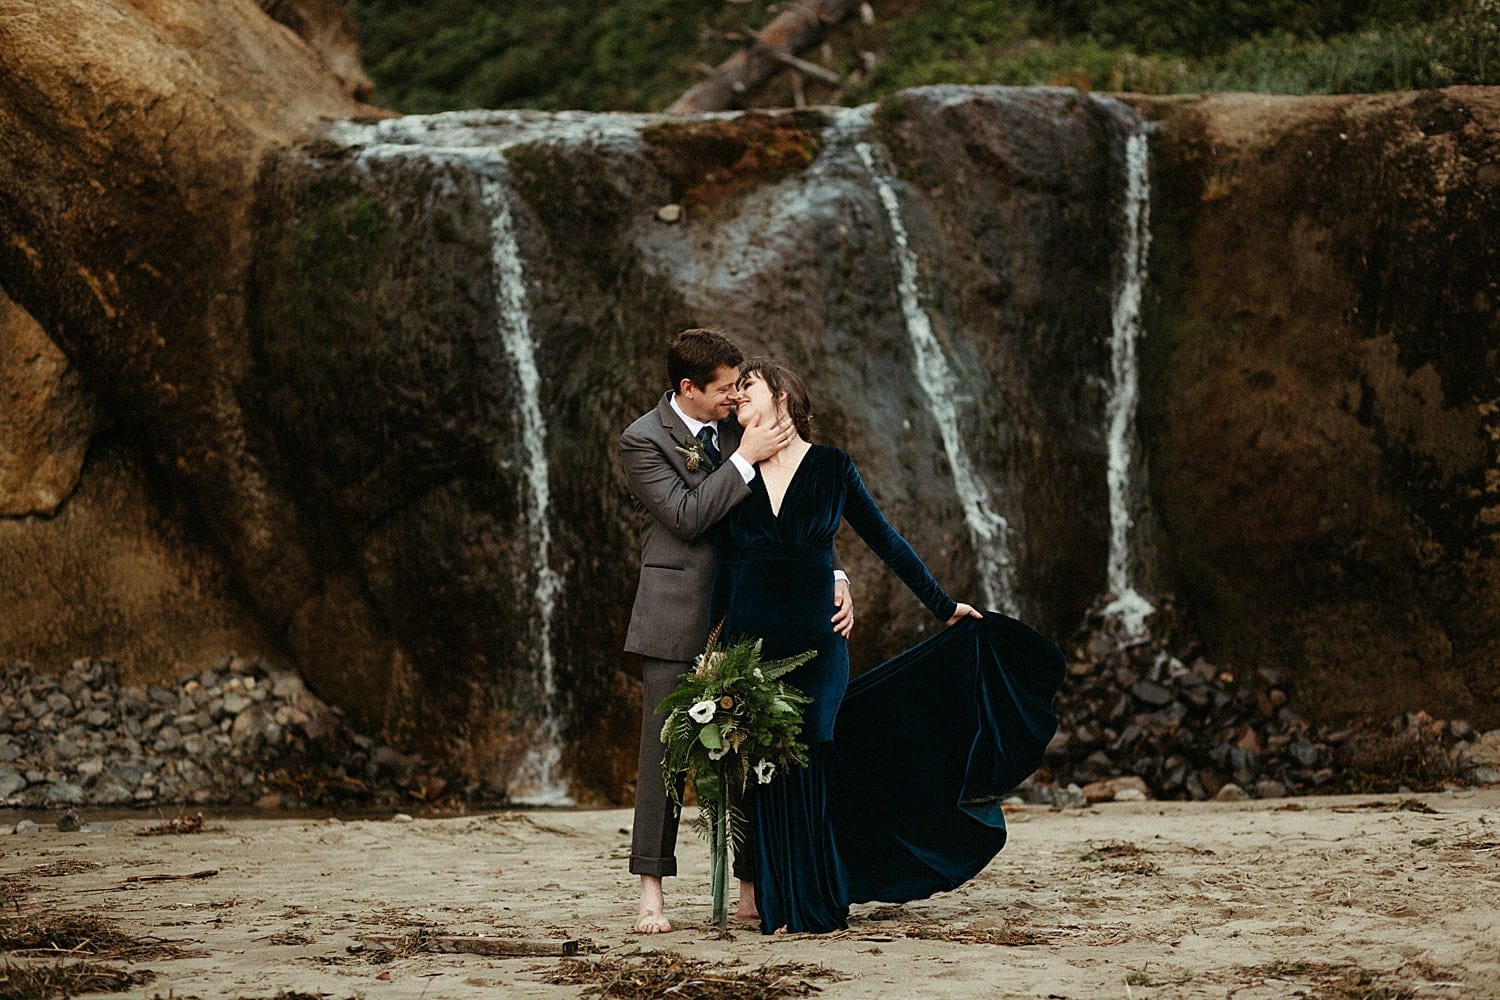 blue velvet wedding dress at a waterfall for oregon coast hug point elopement captured by marcela pulido photography portland oregon wedding and elopement photographer